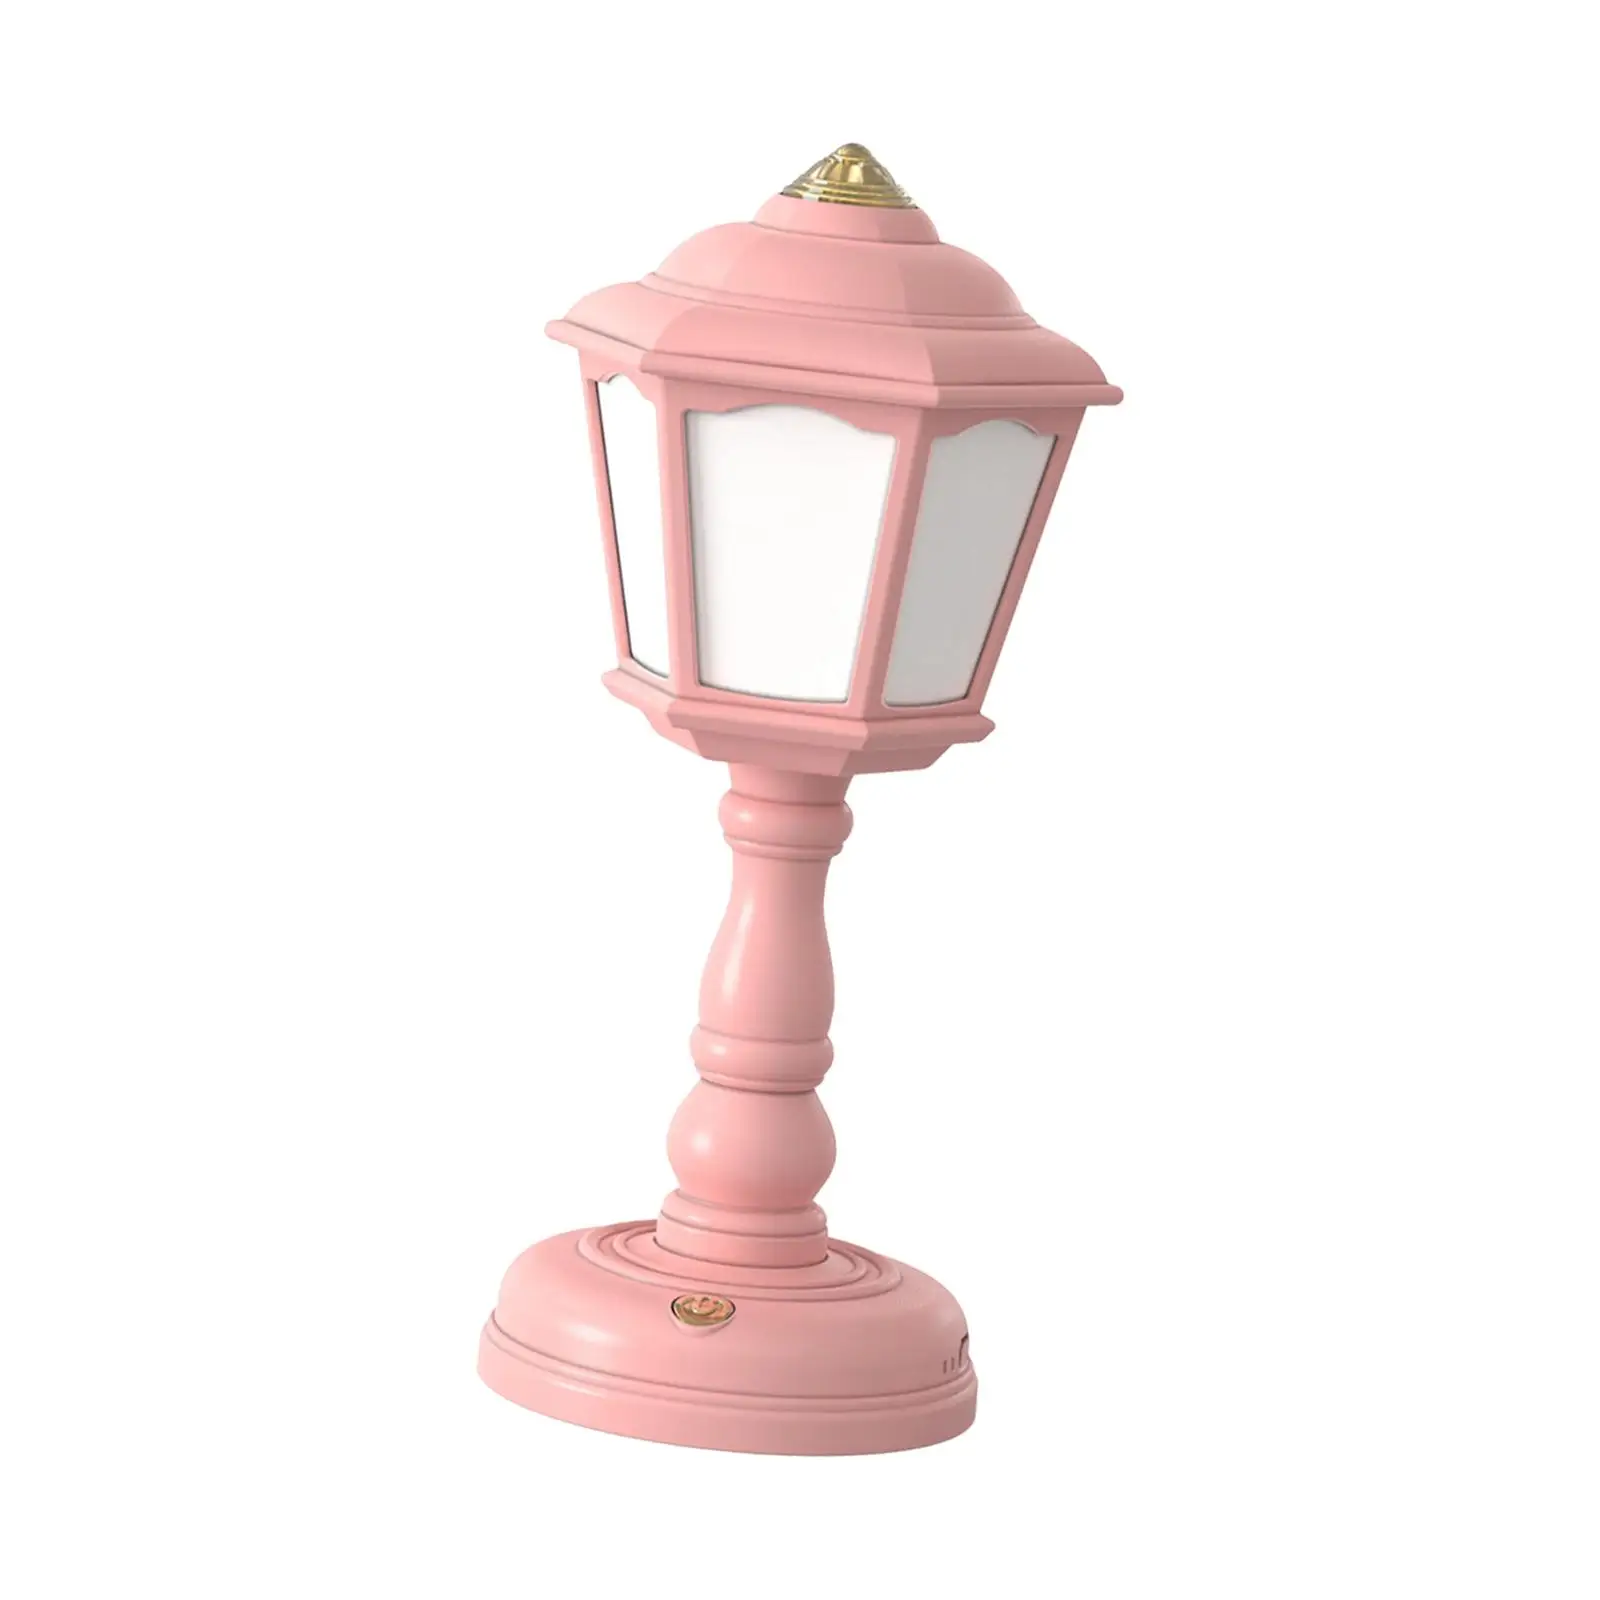 Mini Retro Table Lamp Decorative LED Night Light for Bedroom Bedside Dorm